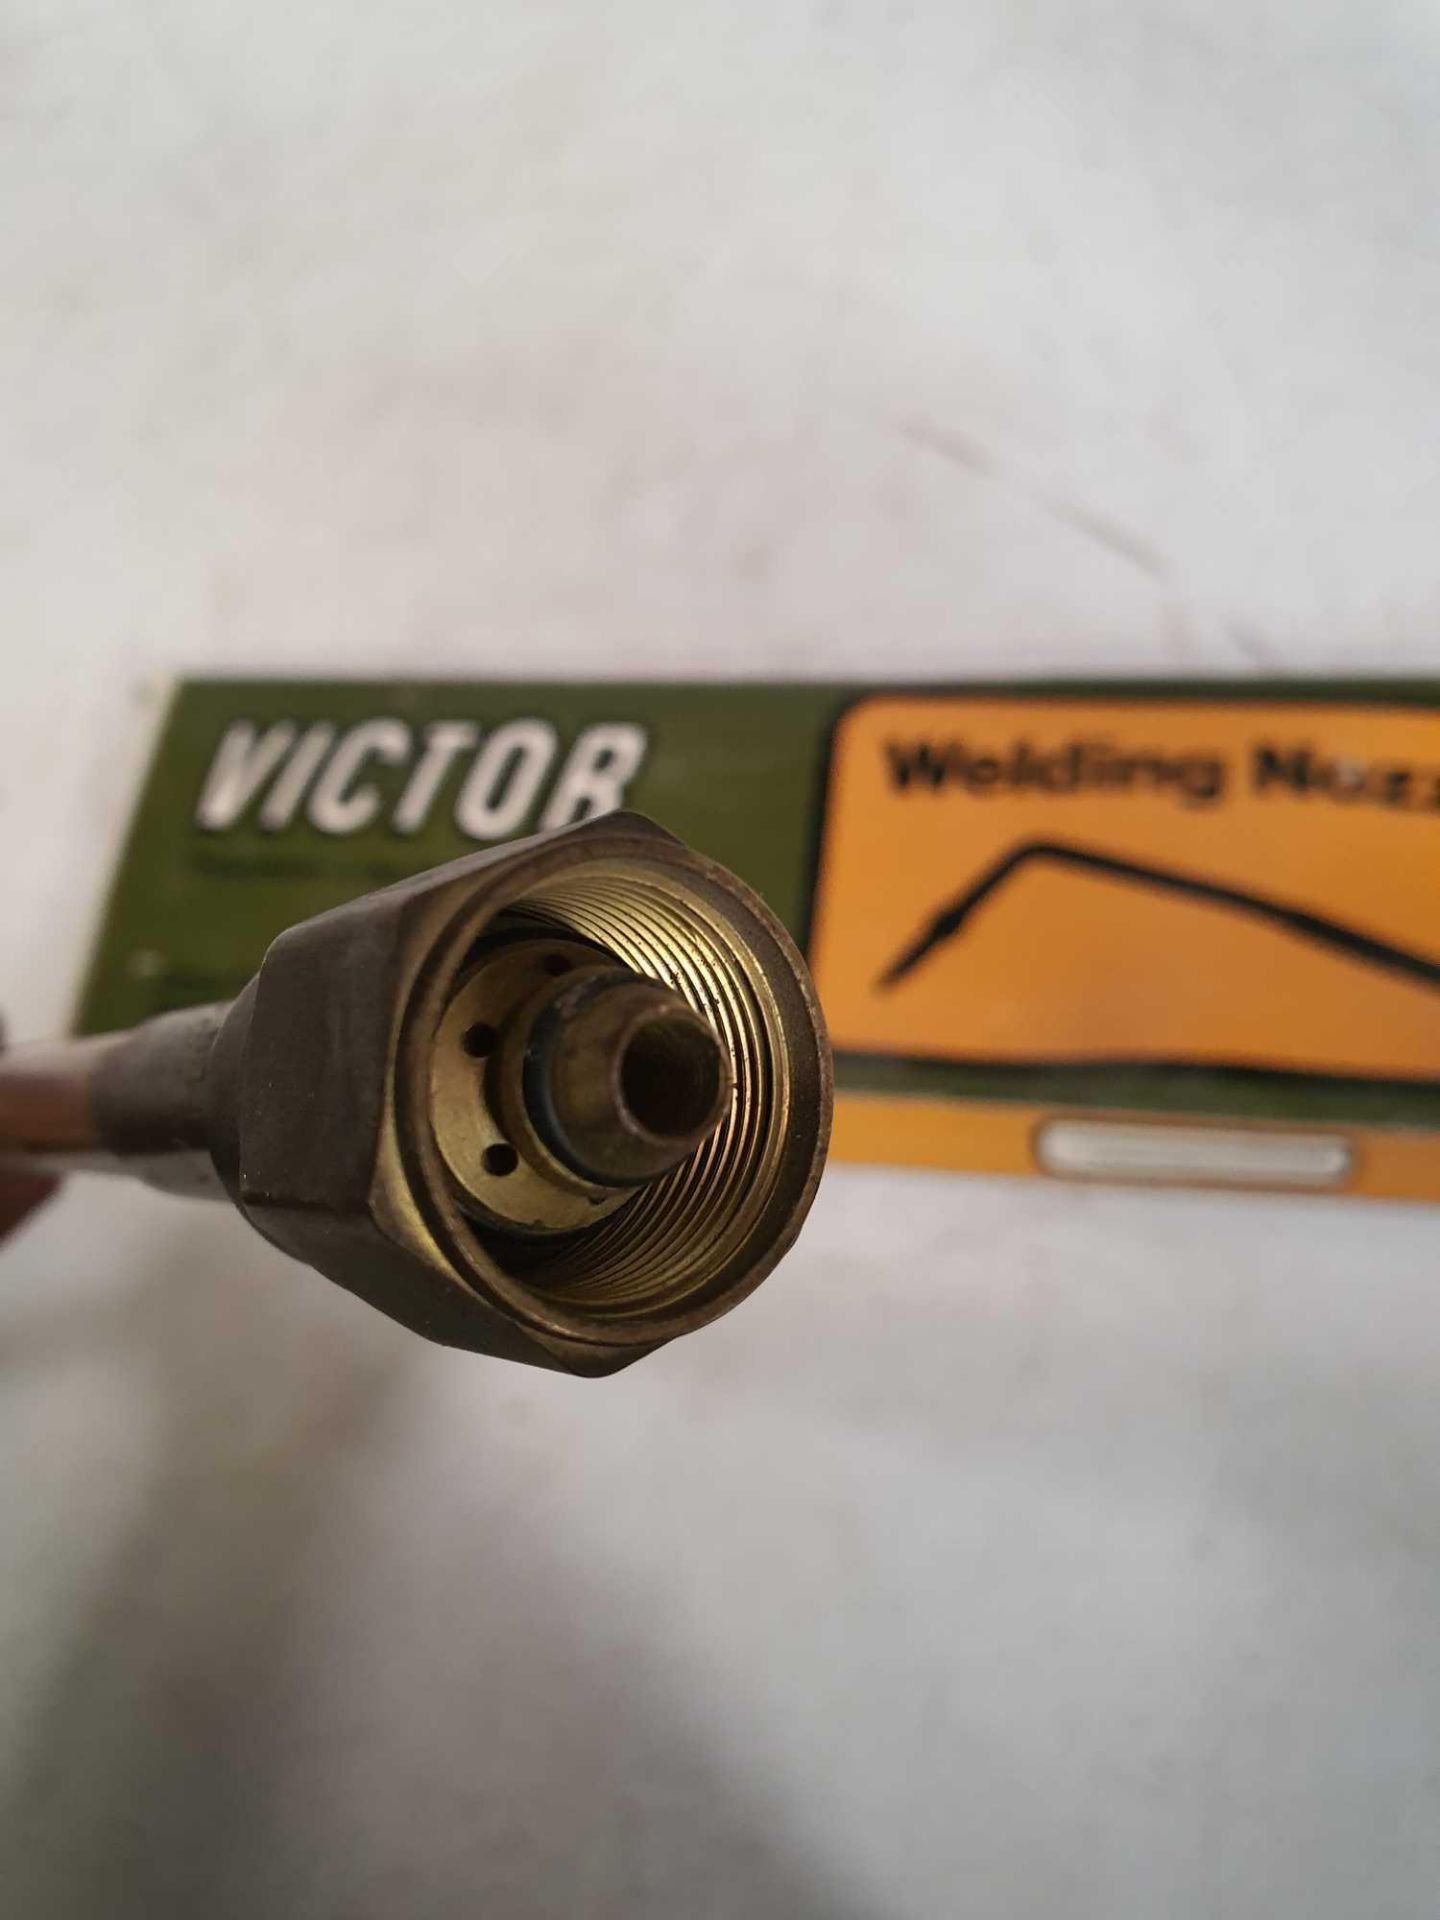 Victor welding nozzle - Image 2 of 3